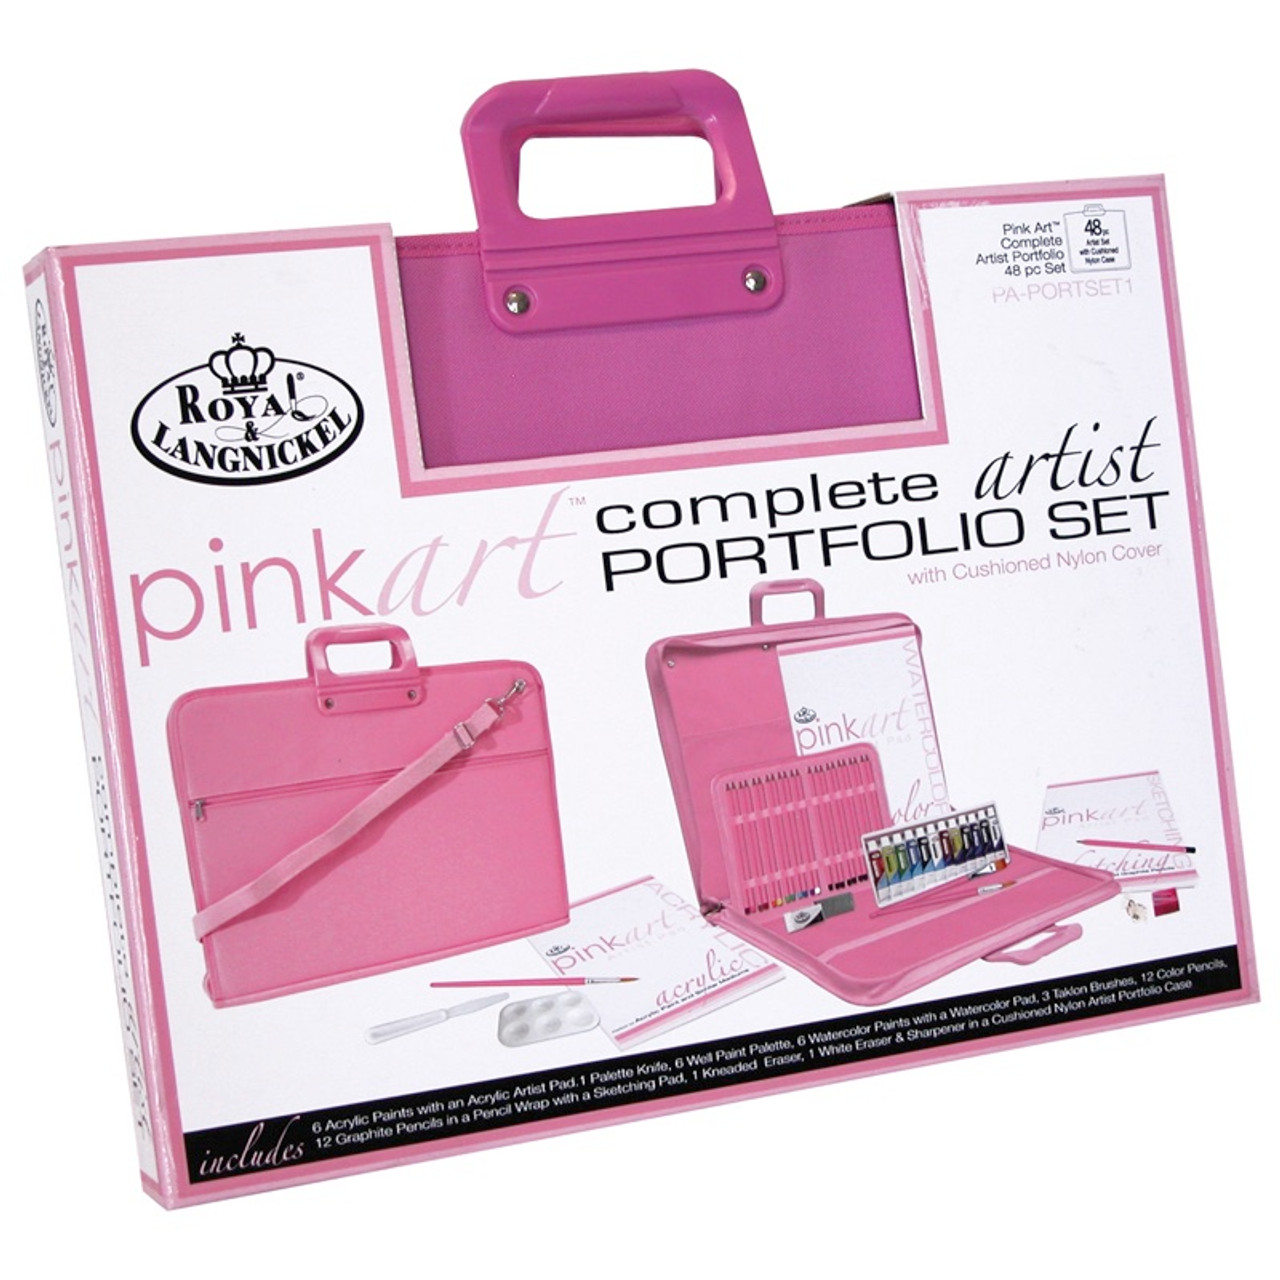 Royal & Langnickel Pink Art Beginner Artist Sketching and Drawing